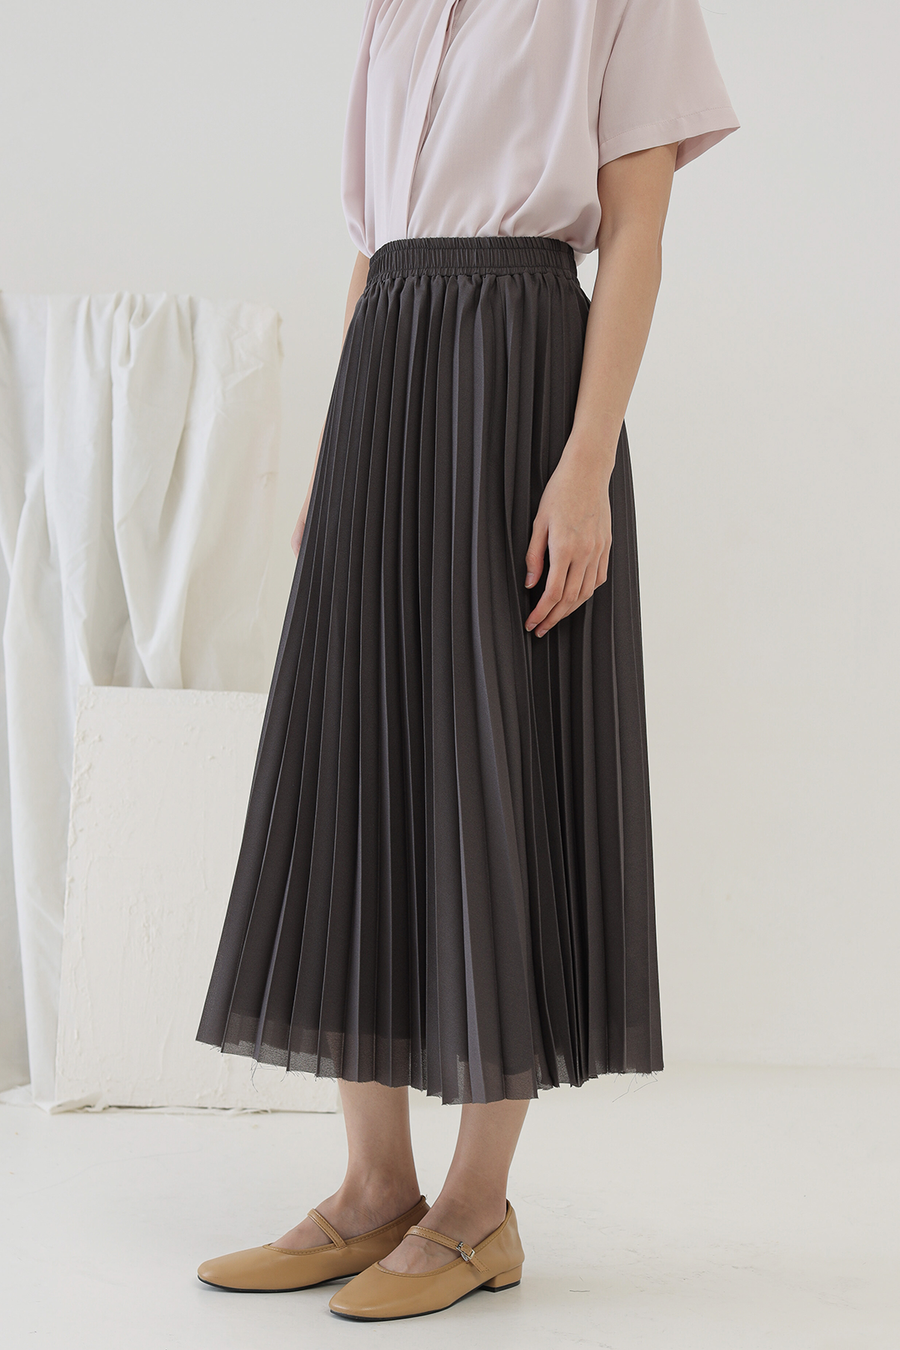 Granite Grey Slate Pleated Skirt